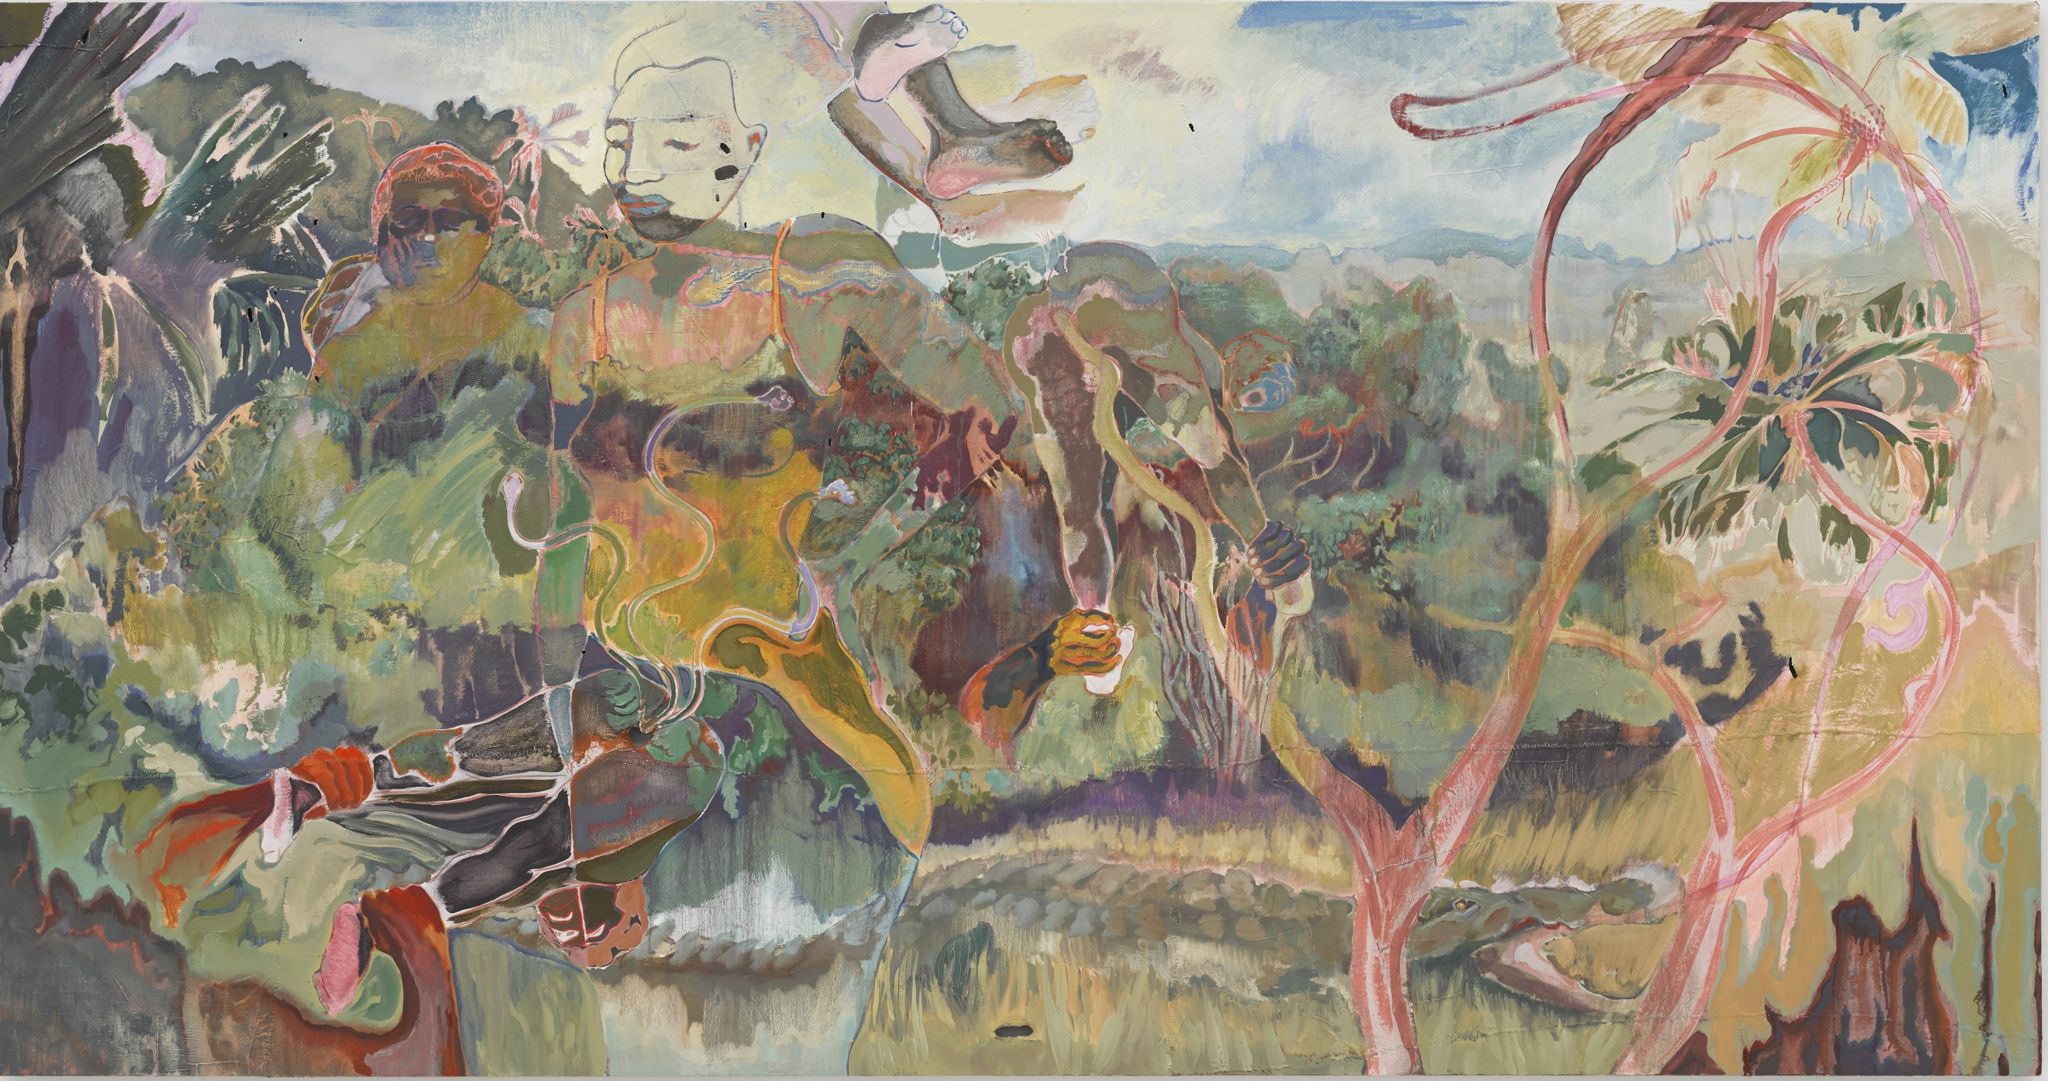 Michael Armitage, The Paradise Edict, 2019. Oil on Lubugo bark cloth, 220 x 420 cm. The Joyner/Giuffrida Collection